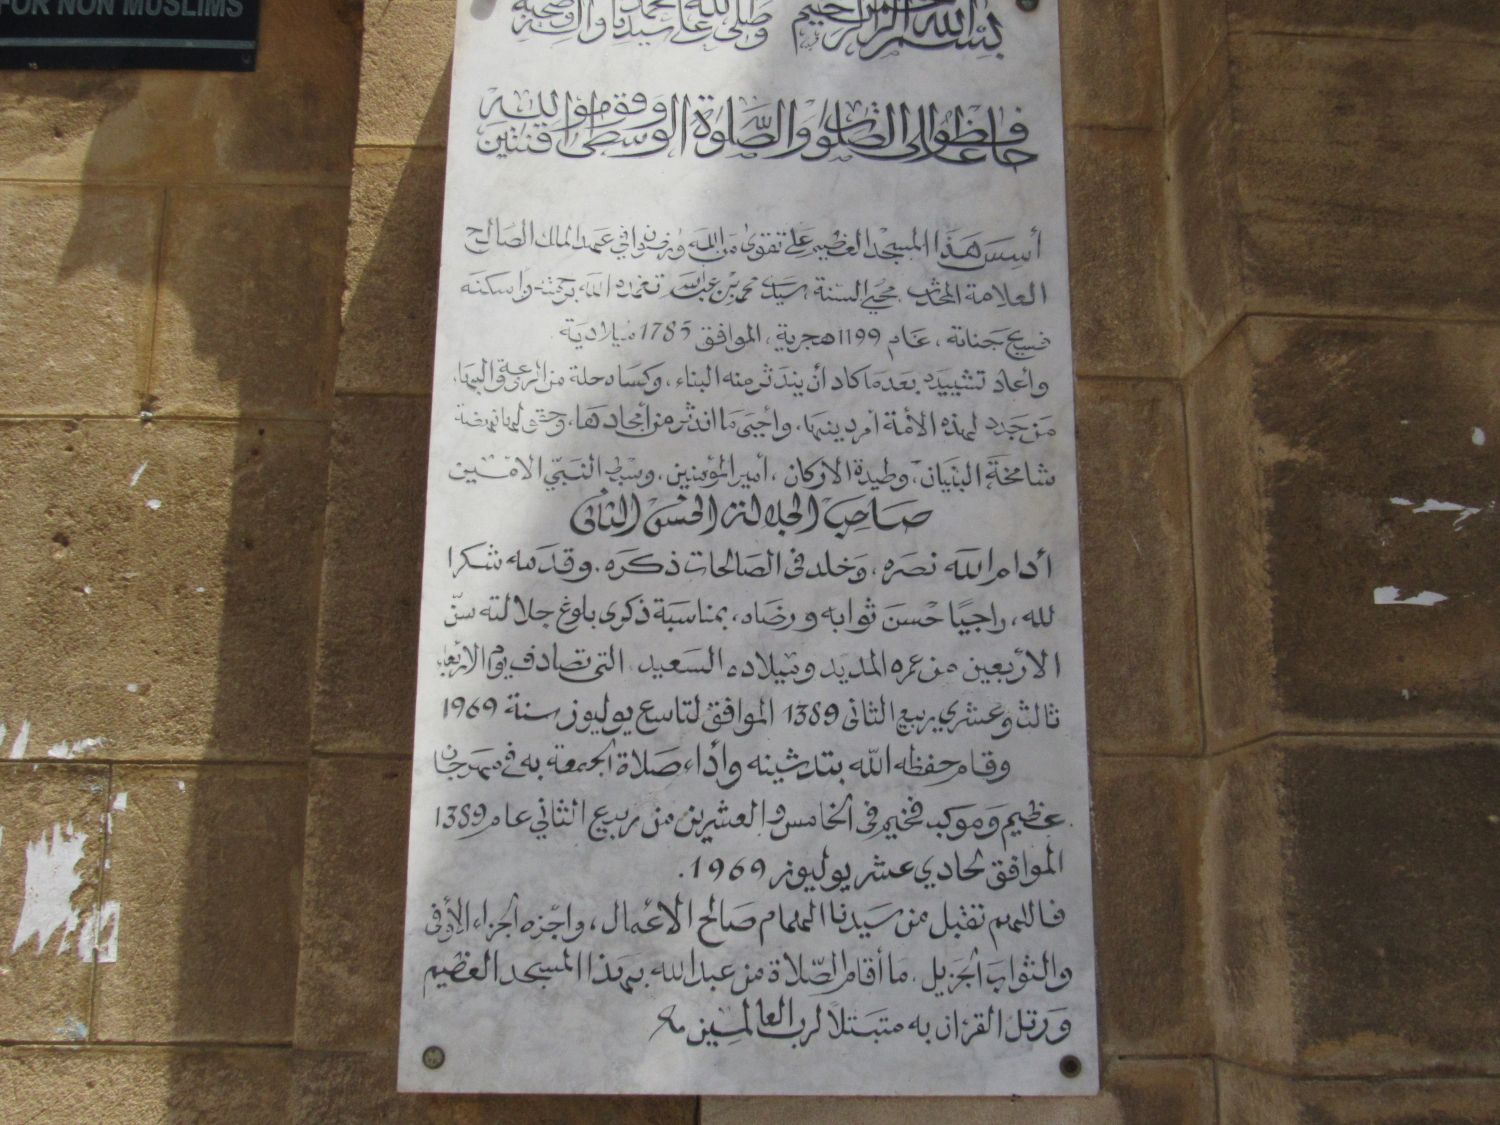 Exterior view, descriptive plaque on mosque exterior.